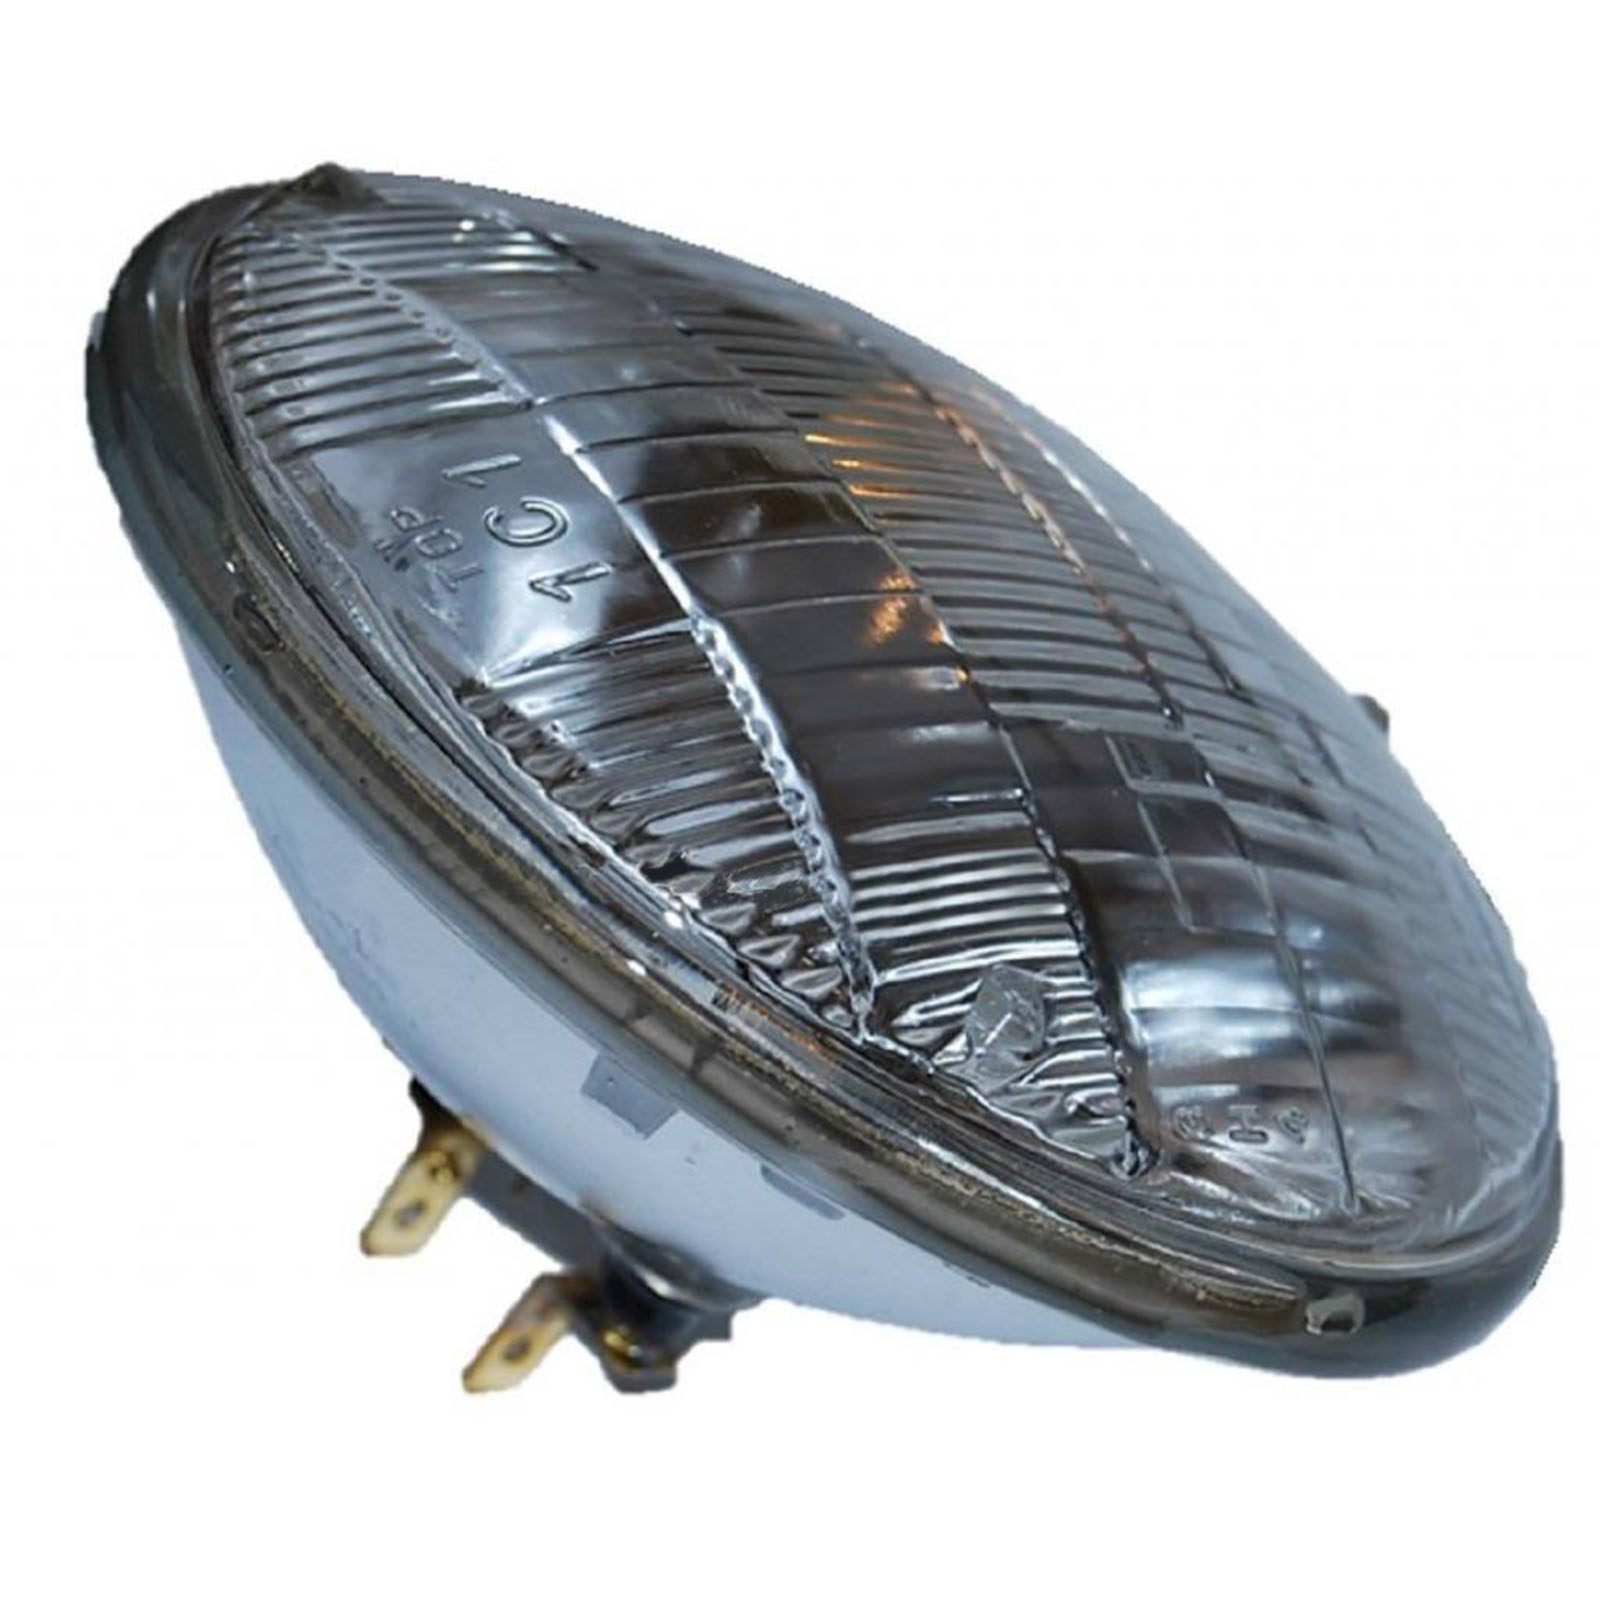 5 3 4 Sealed Beam High Beam Headlight Headlamp Head Light Bulb Glass New 5001 Ebay